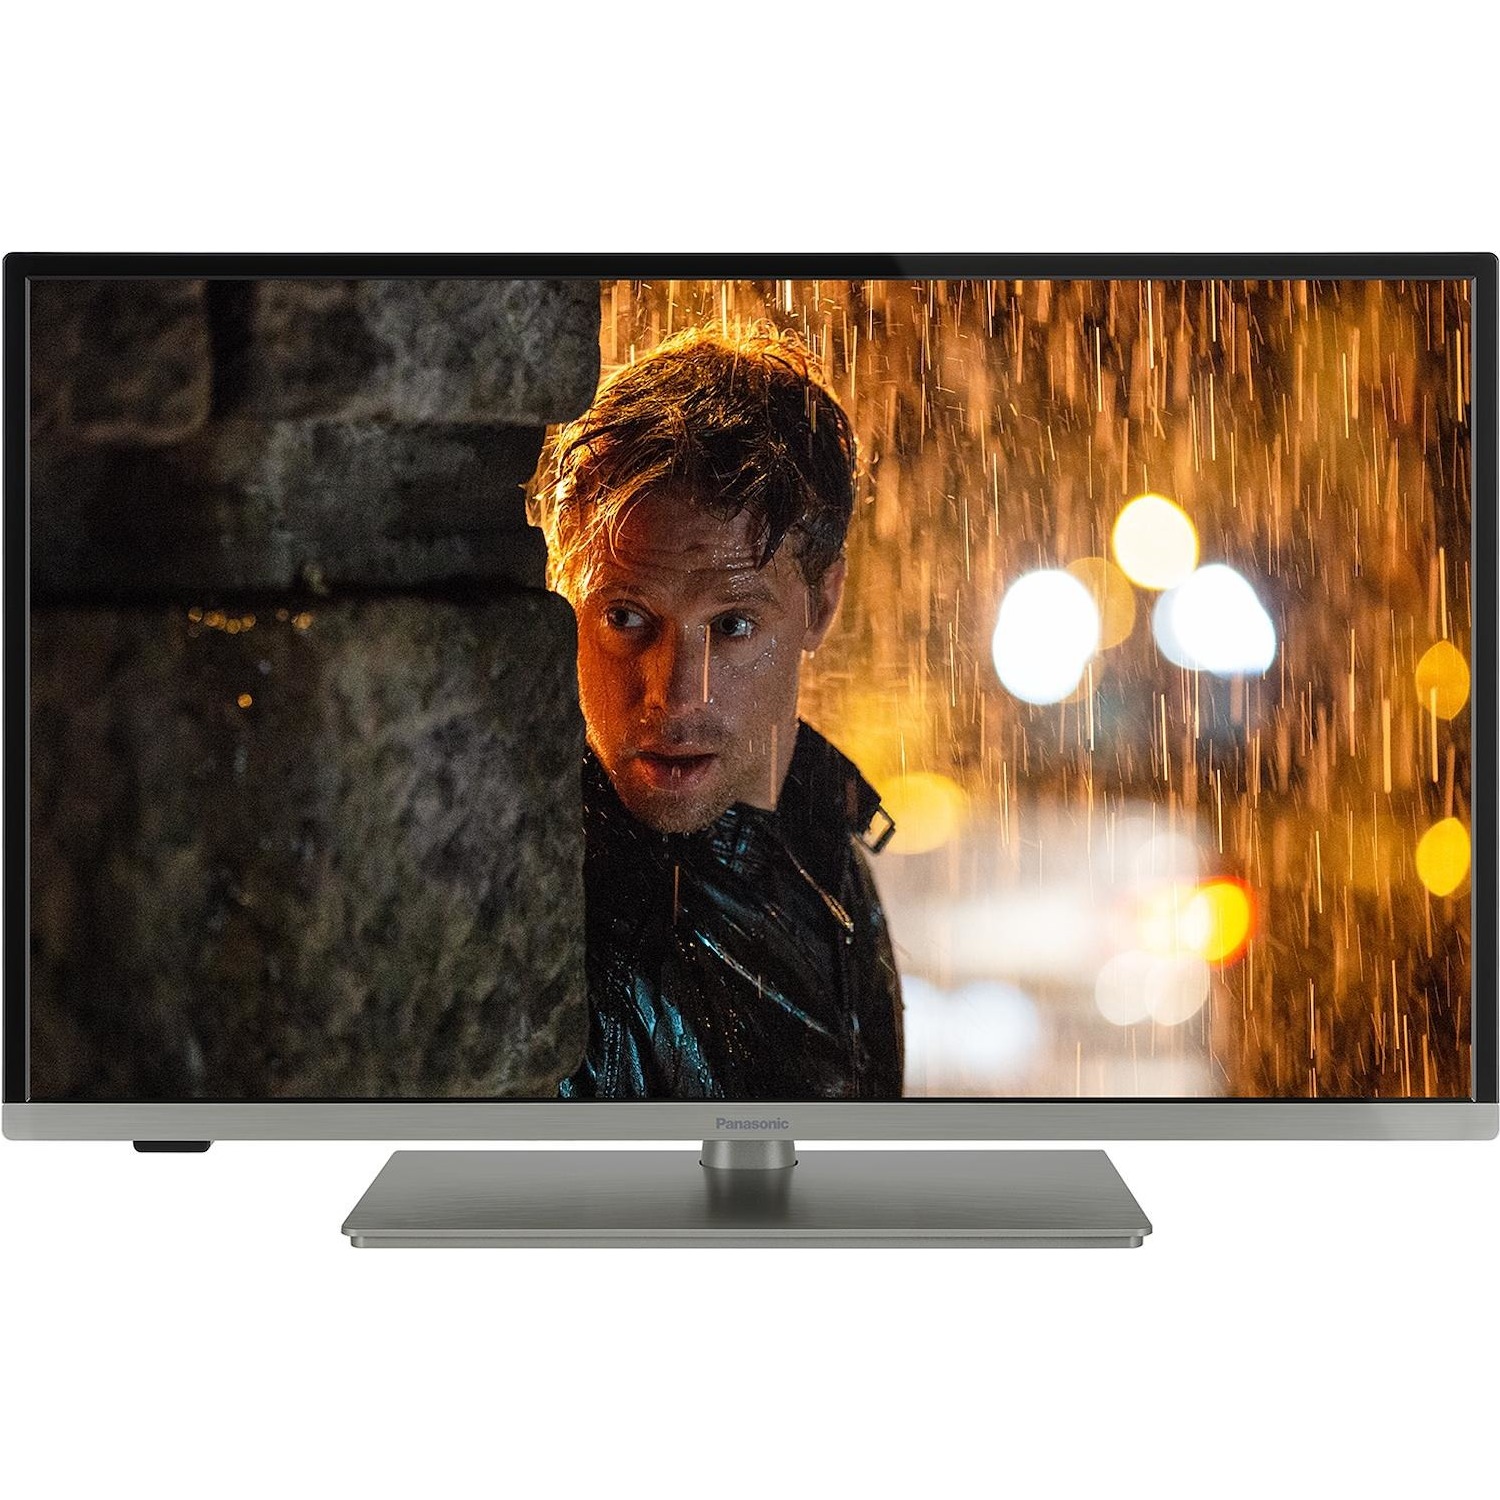 Immagine per TV LED Smart Panasonic 32JS350 da DIMOStore